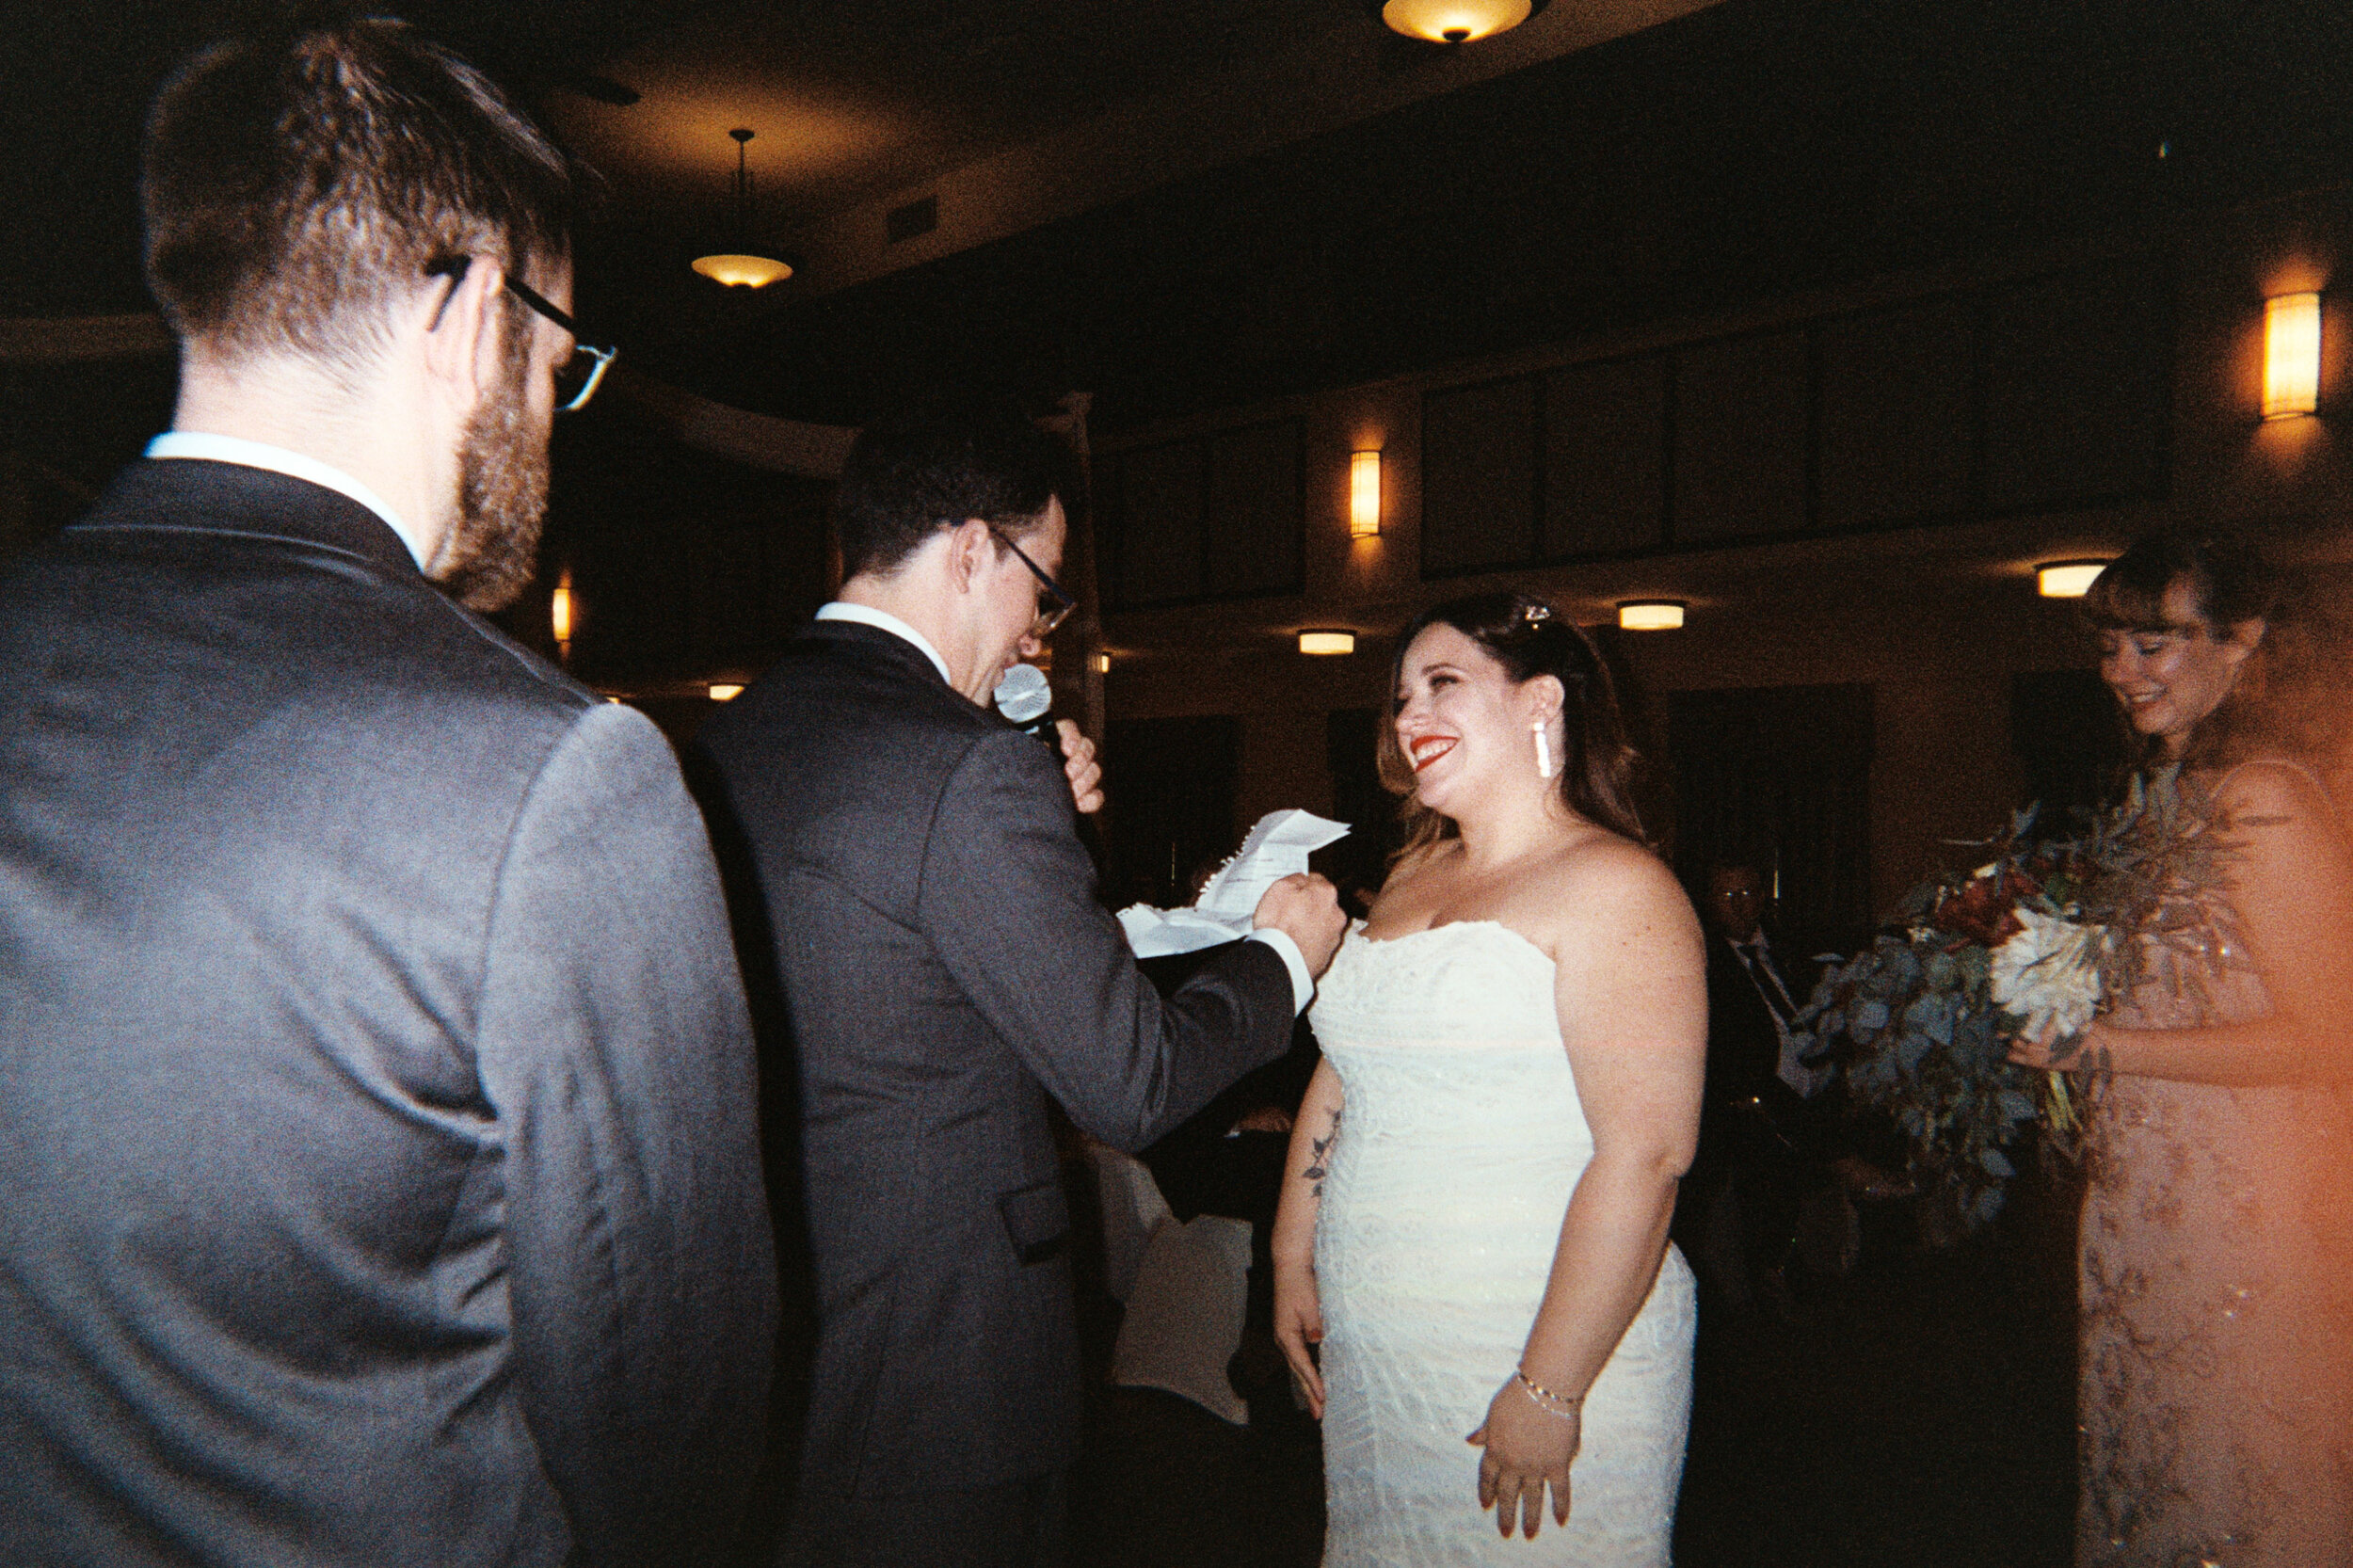 Pittsburgh NYC Film Wedding Photographer - Rat Lab - Lawrenceville - Stephanie Dave176.jpg